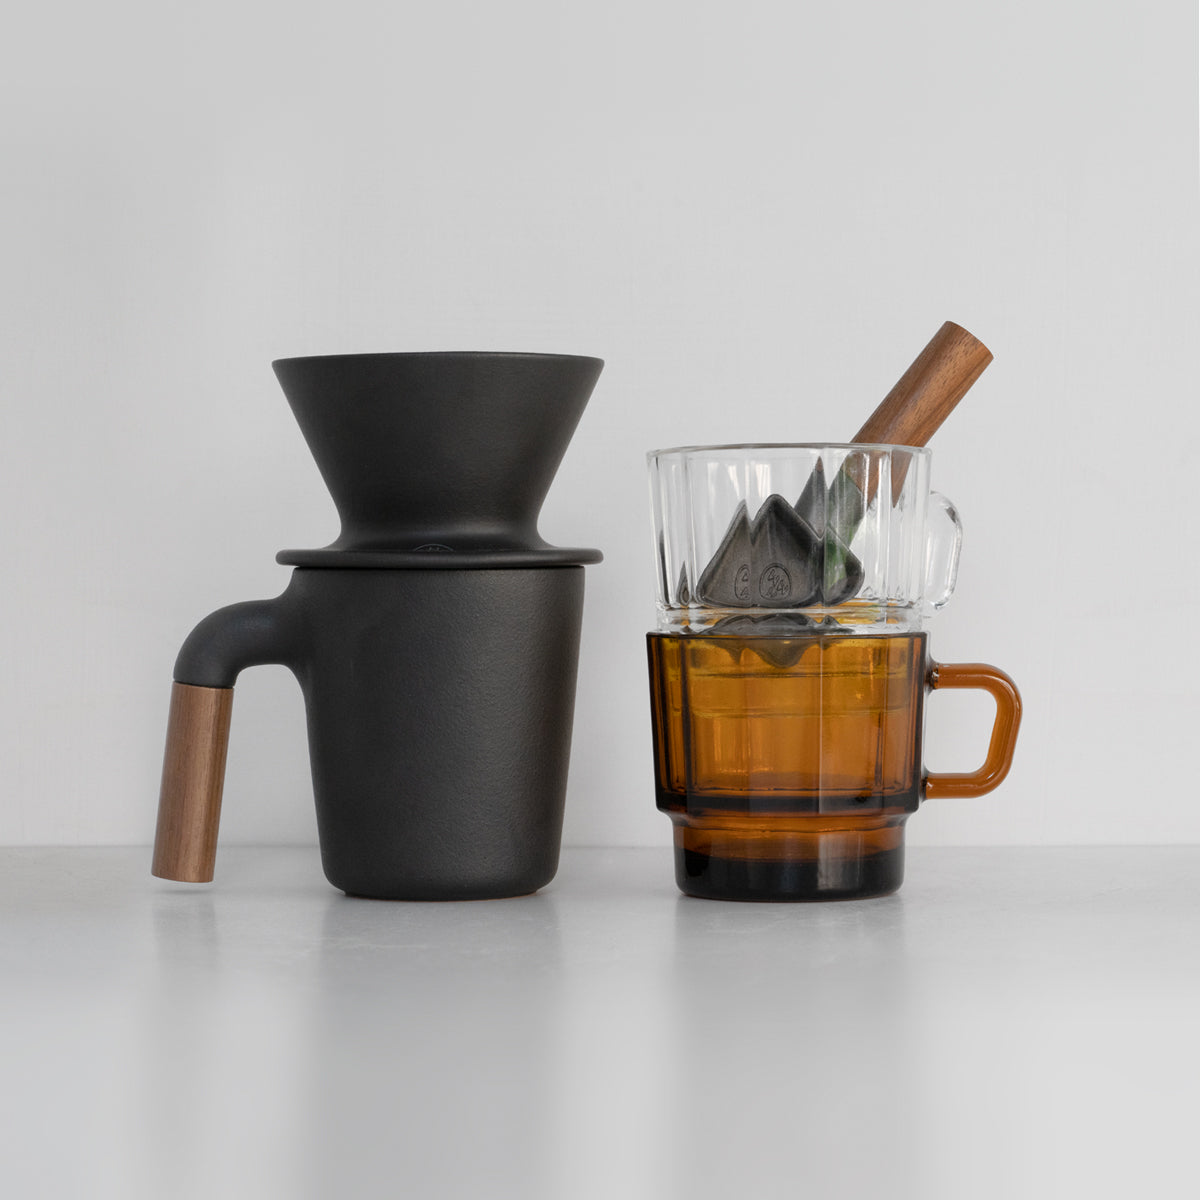 HMM coffee series, ceramic and glass coffee ware